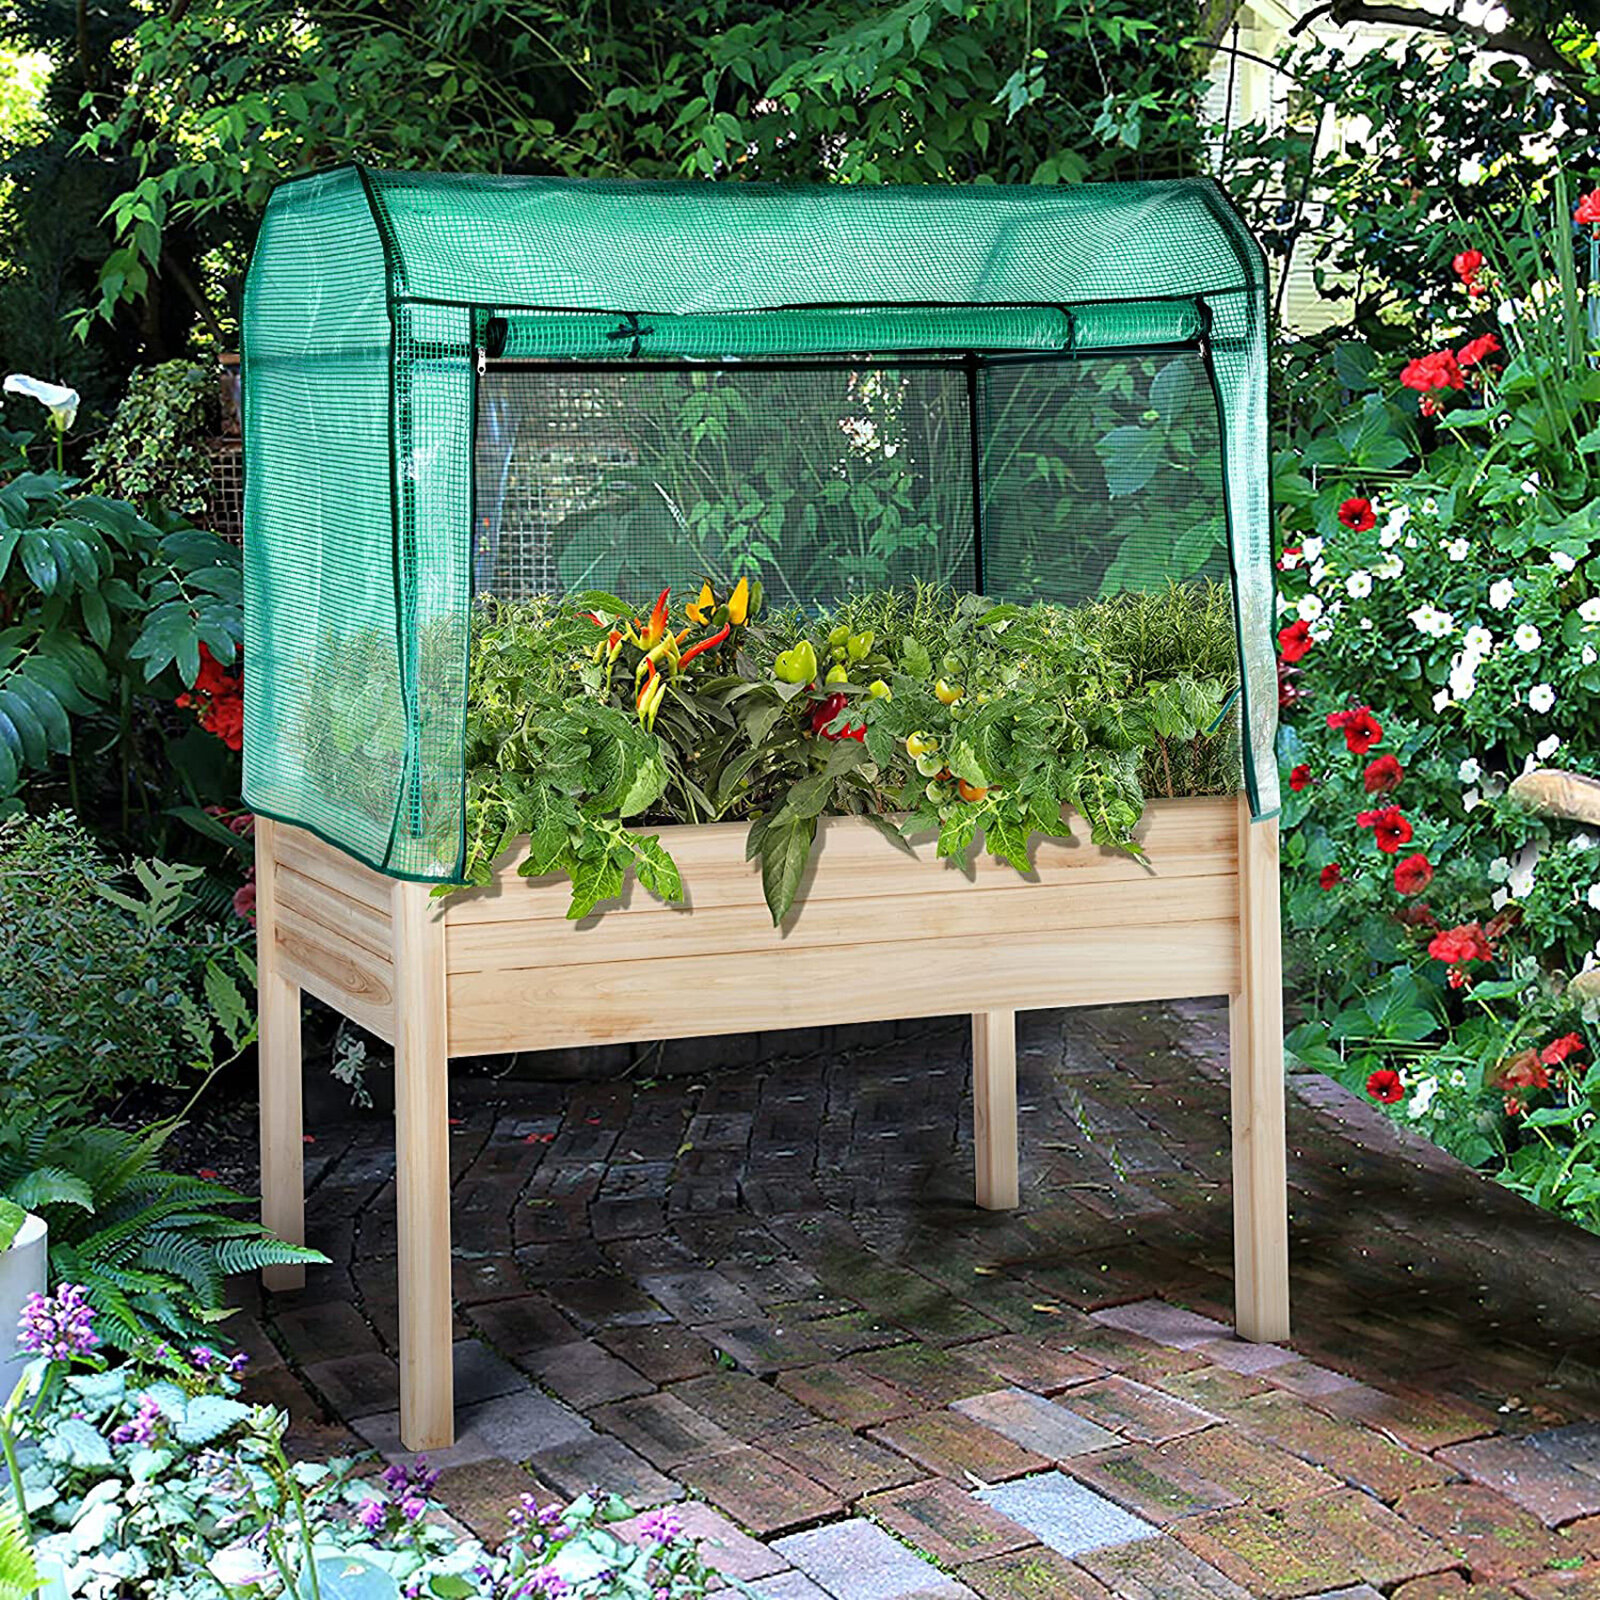 EJWOX Hexagon Raised Garden Bed Kit,Outdoor Garden Planter Box for Vegetable/Flower/Herb/Fruit,DIY Gardening 24 x 21 x 14.4,Green 